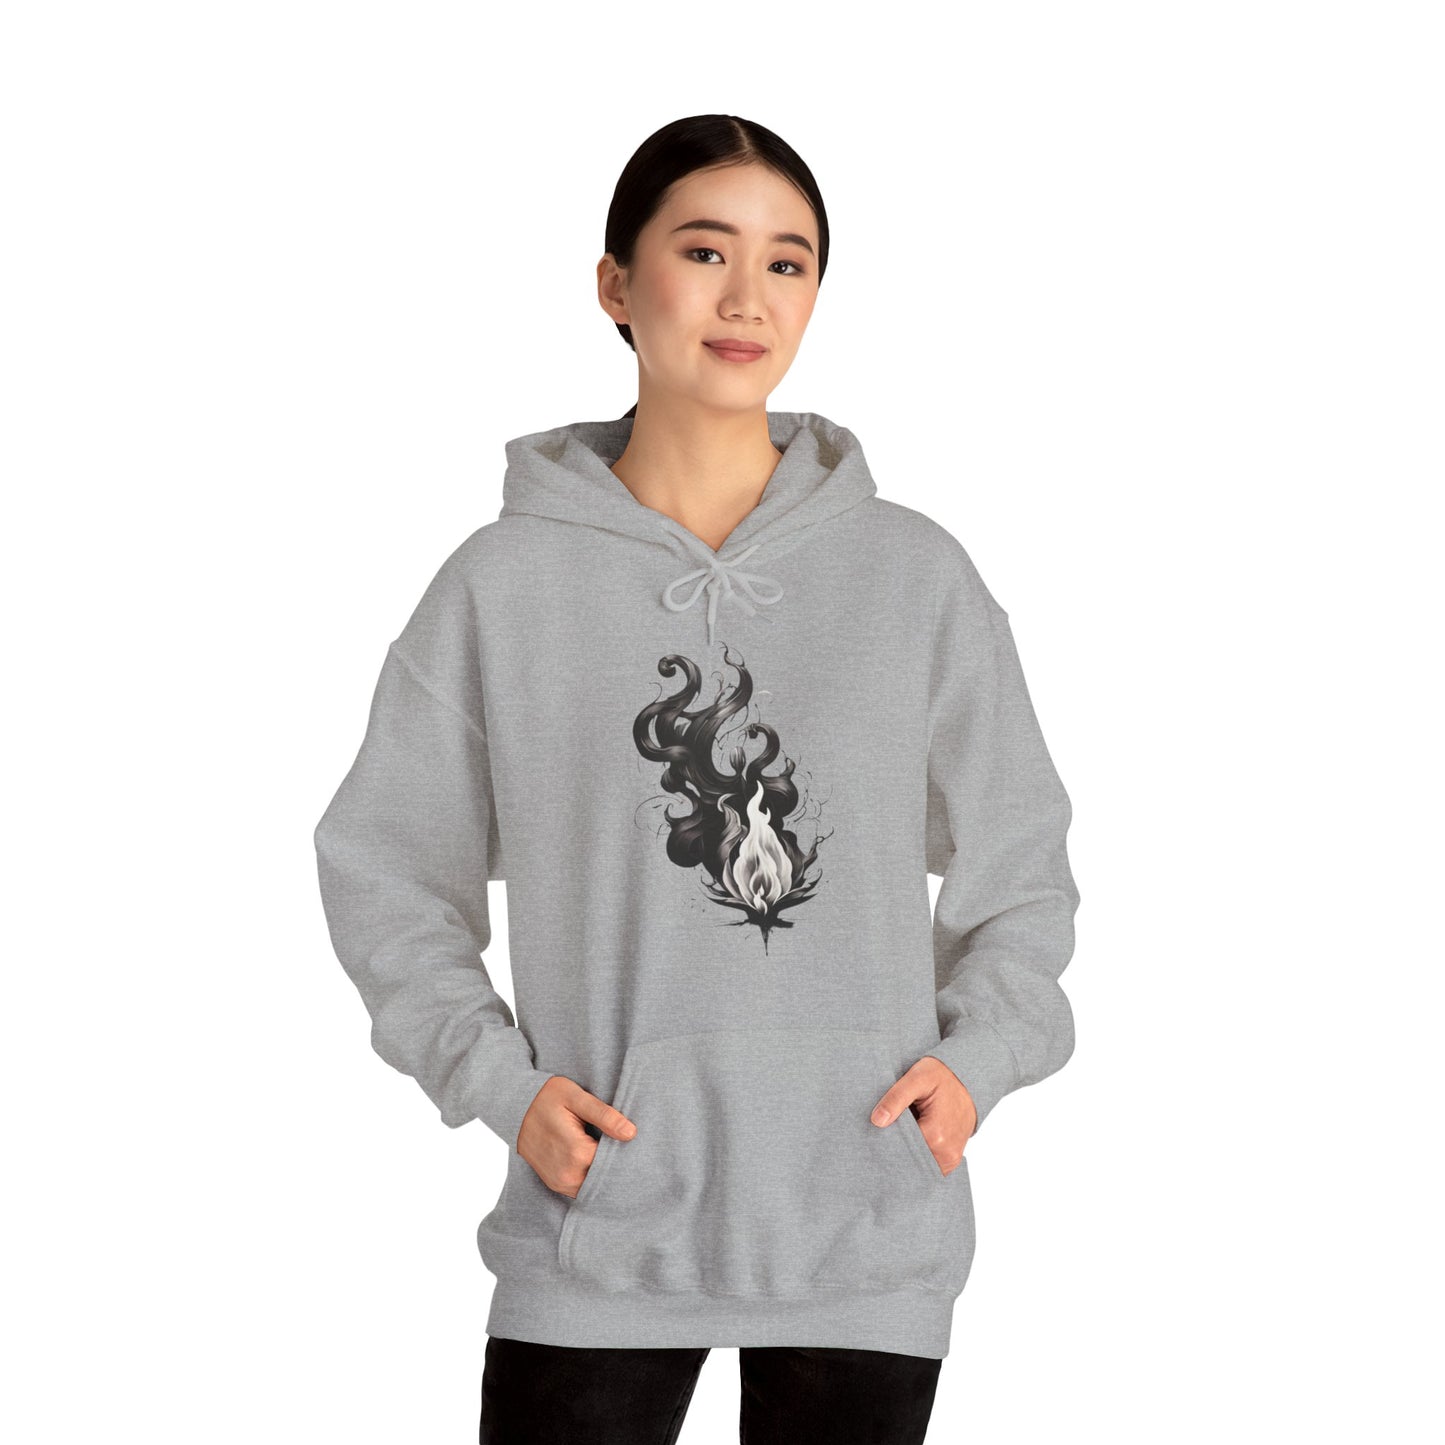 Black and White Flame - Unisex Hooded Sweatshirt